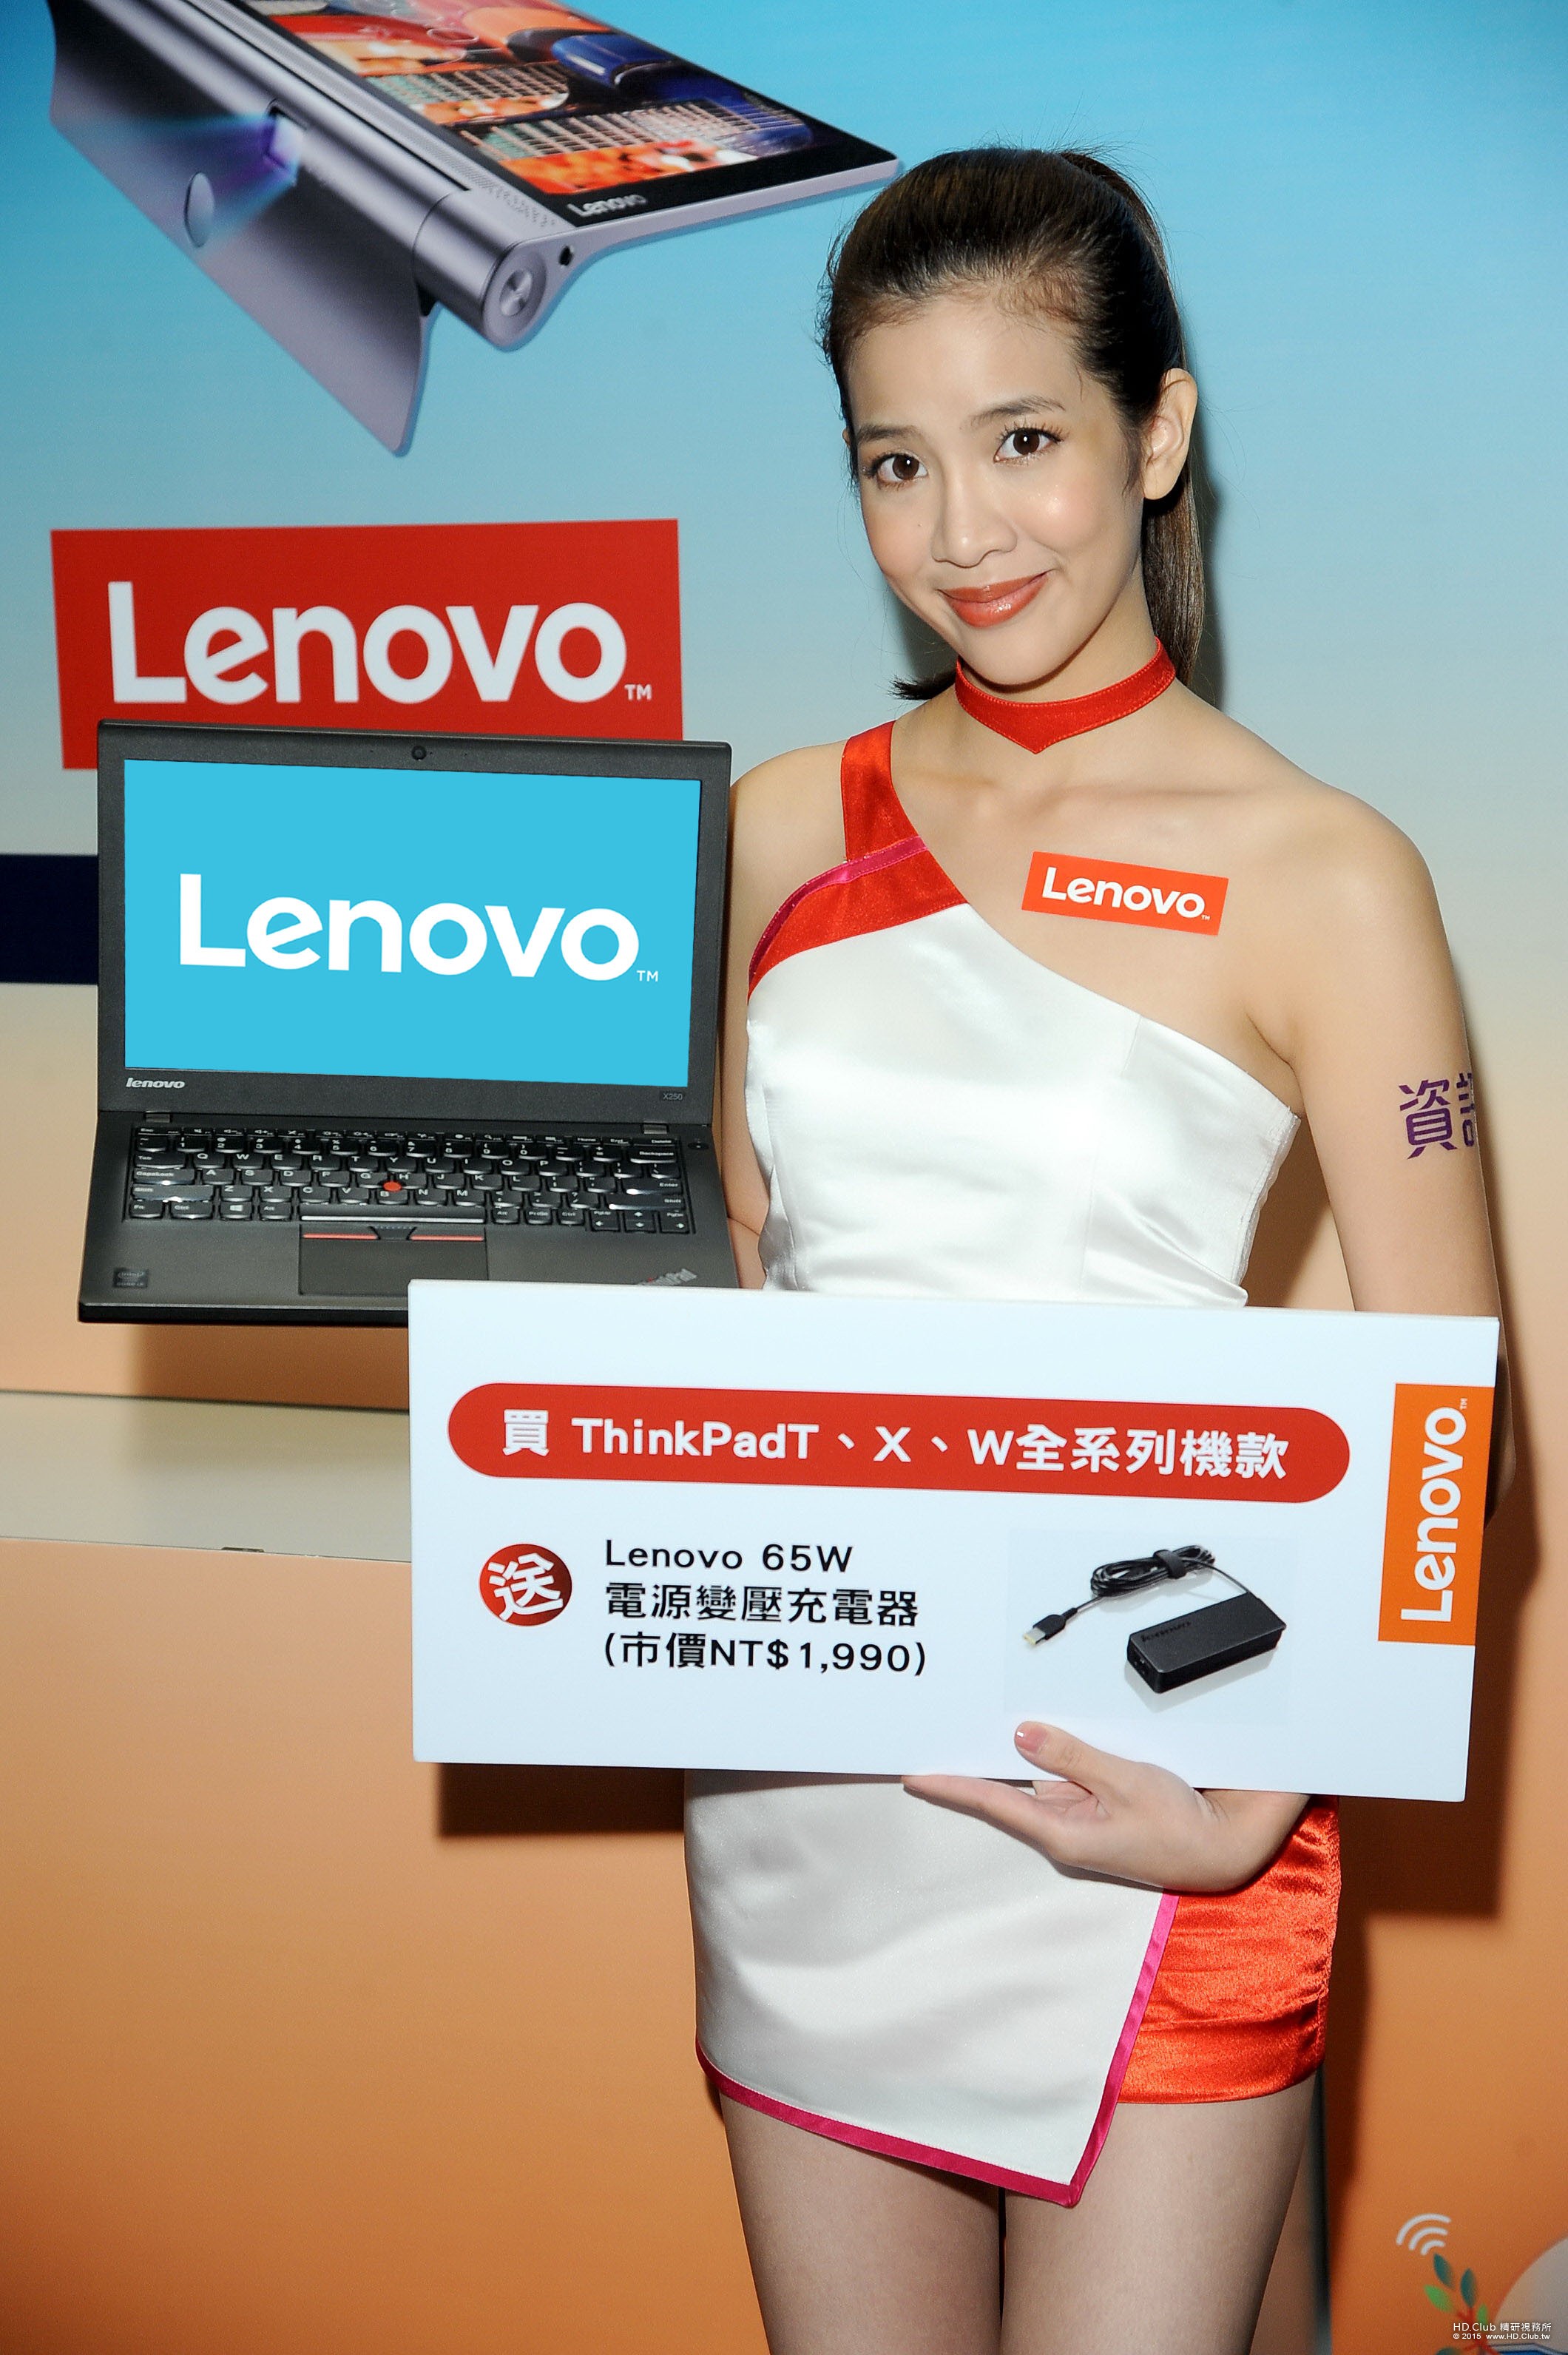 【Lenovo新聞照片二】資訊月期間凡購買ThinkPad  T、X、W 全系列機款即贈送Lenovo 65W.jpg